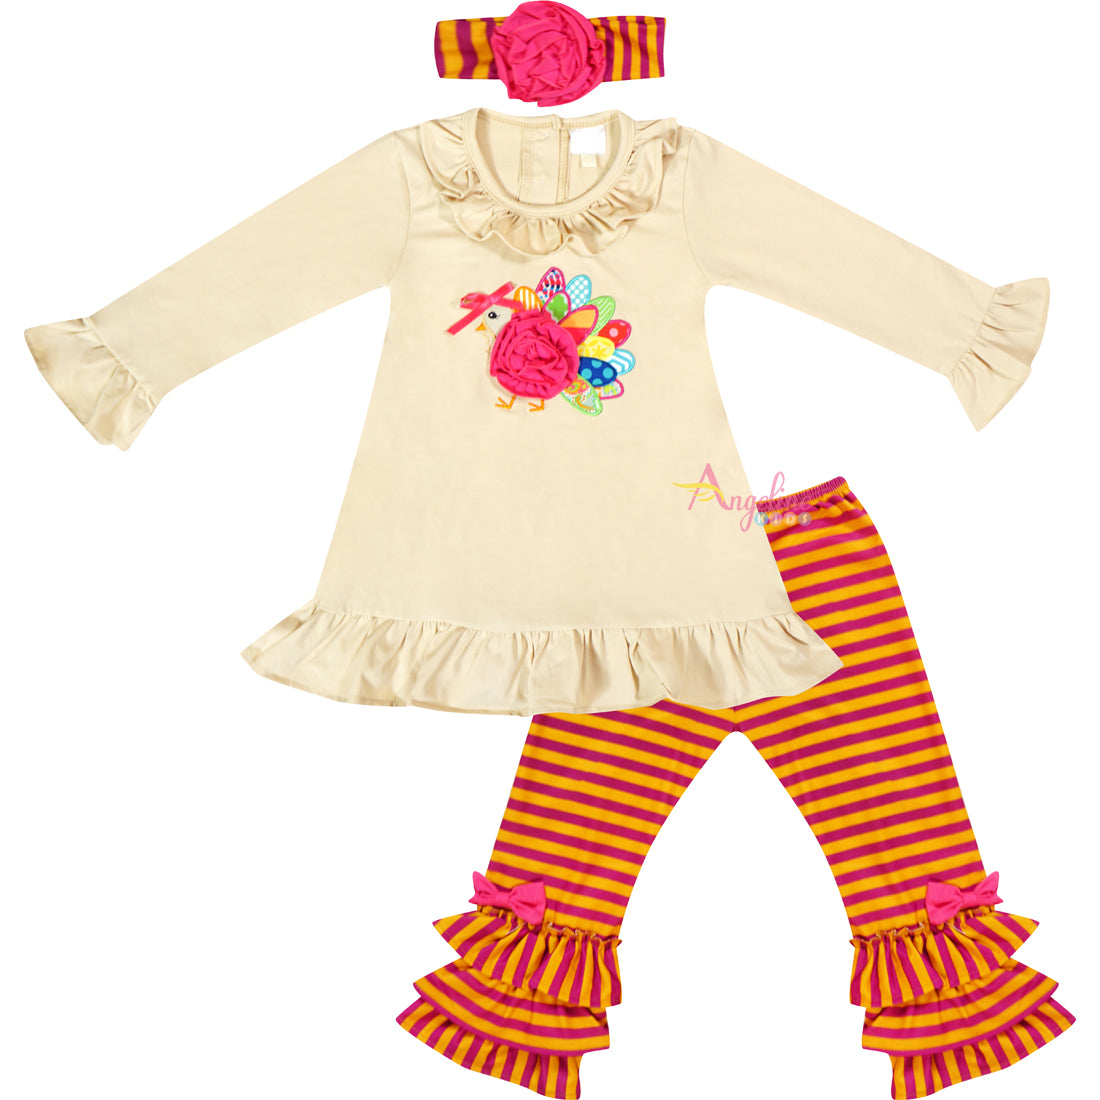 Baby Toddler Little Girls Thanksgiving Turkey Ruffle Top Pants Set w/ Free Headband - Ivory Fuchsia Stripes - Angeline Kids